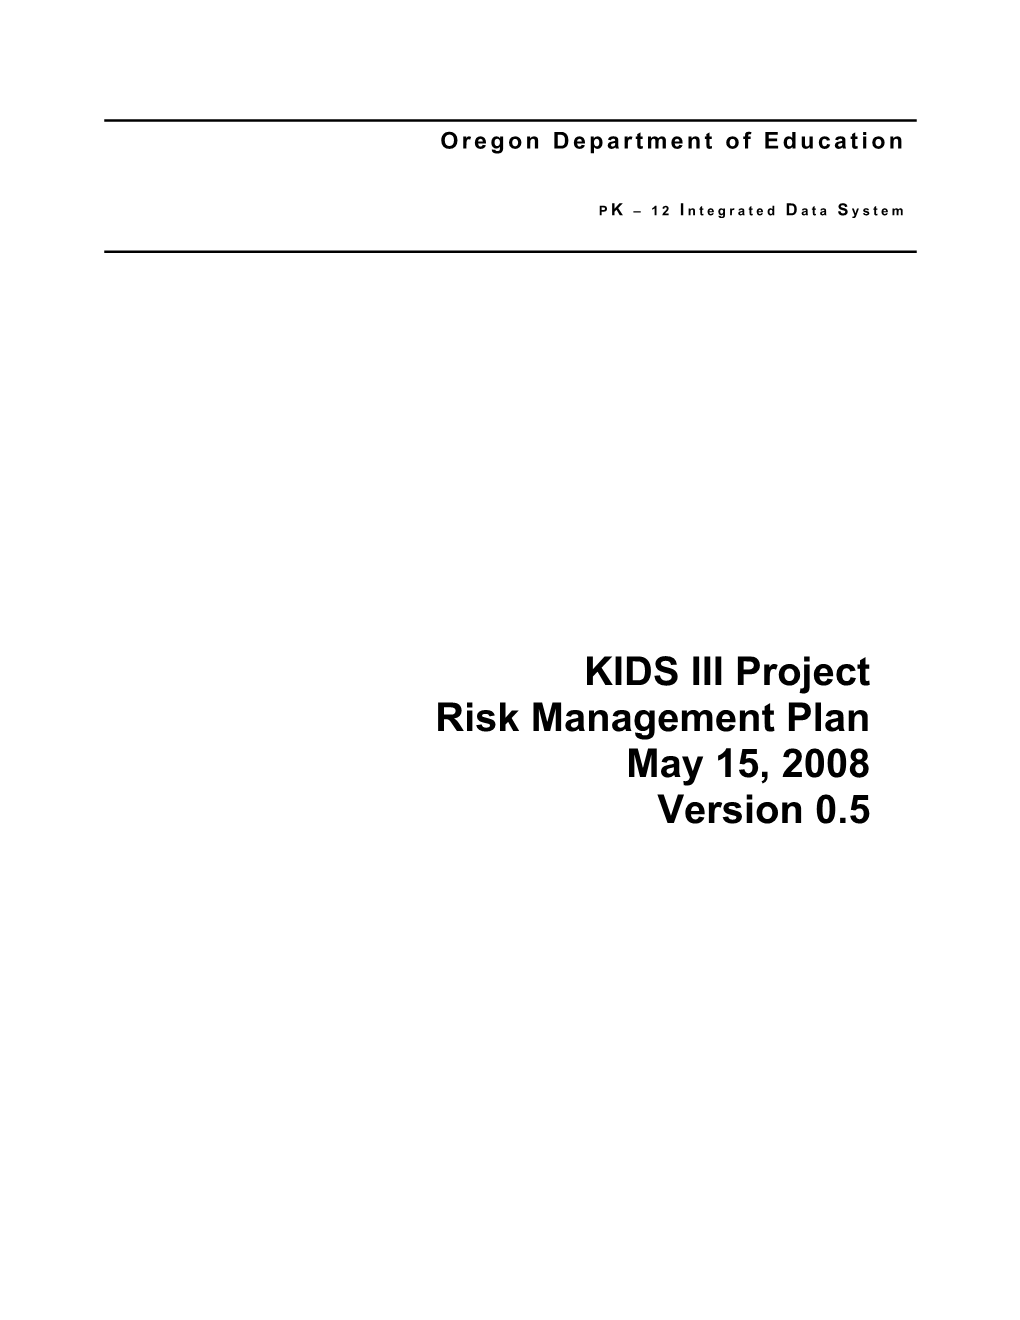 KIDS III Risk Management Plan